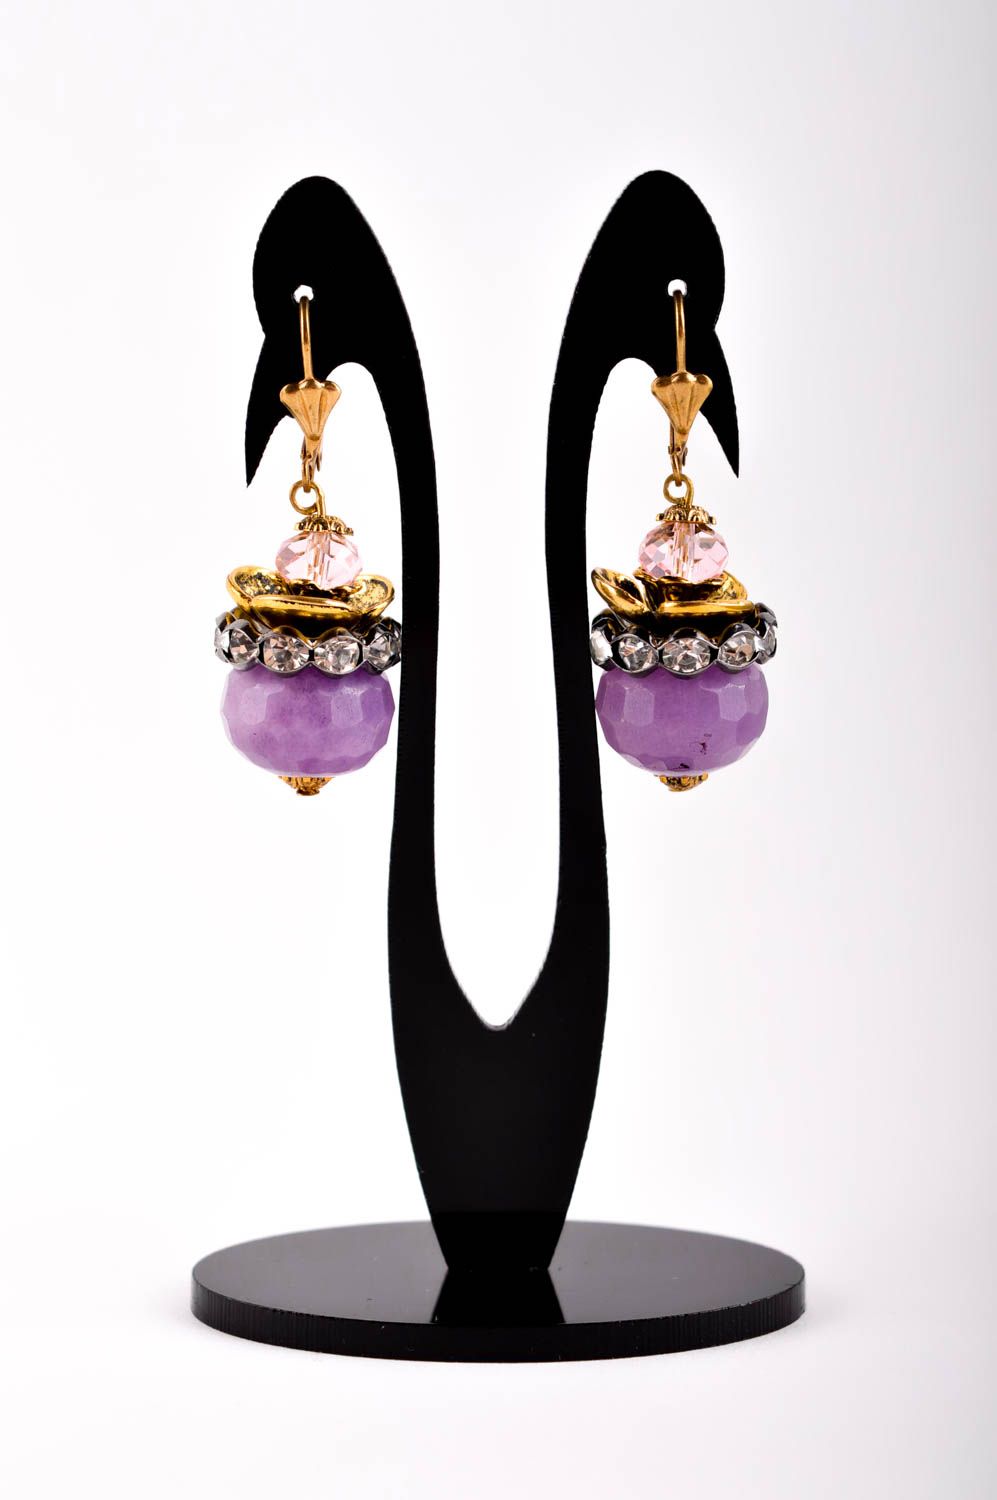 Handmade earrings designer earrings stone earrings with charms unusual jewelry photo 2